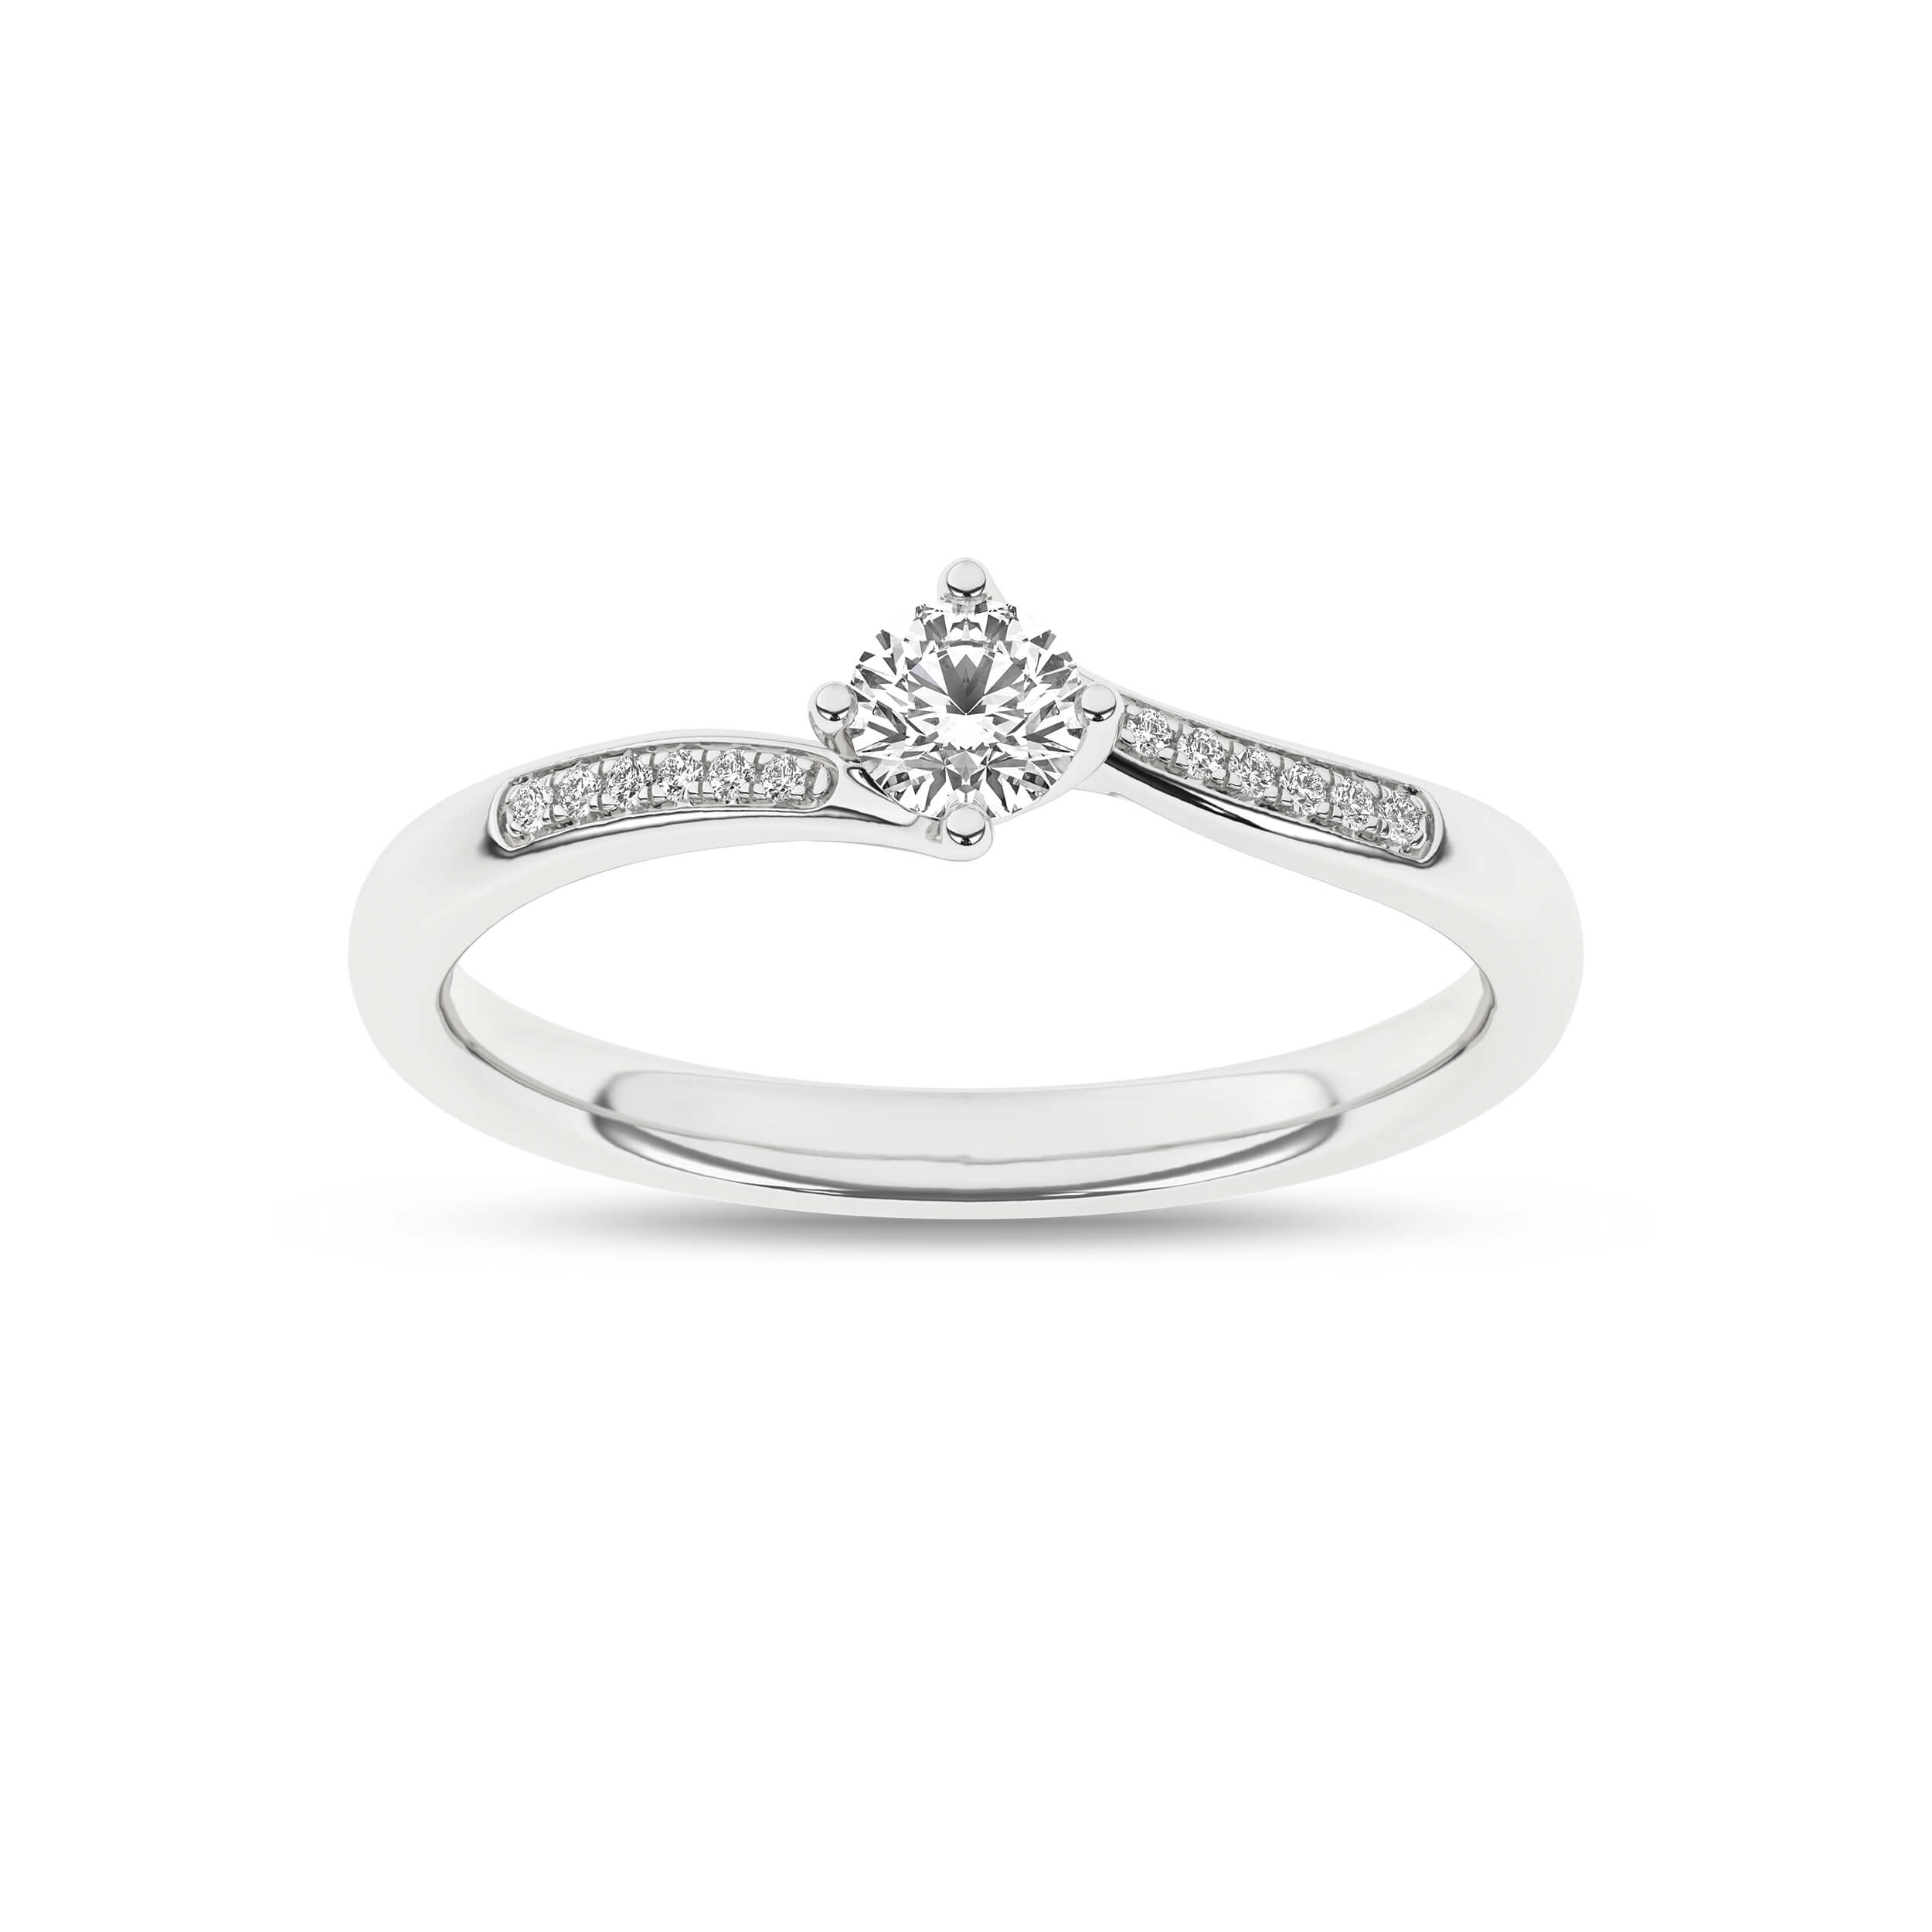 Inel de logodna din Aur Alb 14K cu Diamante 0.23Ct, articol MSD0344EG, previzualizare foto 1